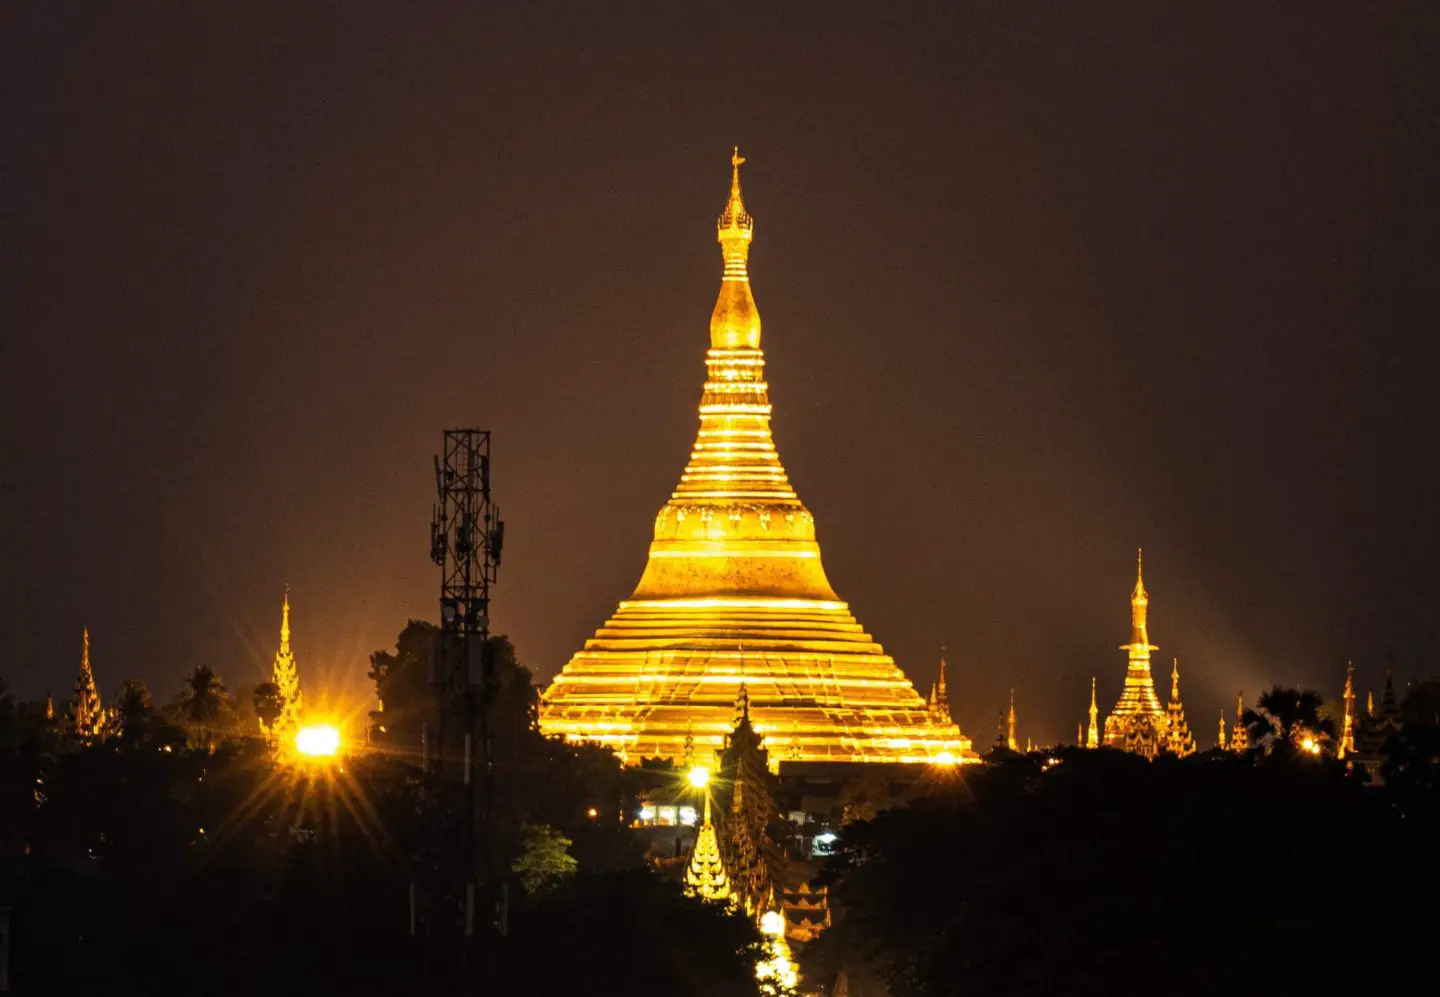 Yangon itinerary - 3 days in Yangon - Schwedagon Pagoda at night, in Yangon, Myanmar